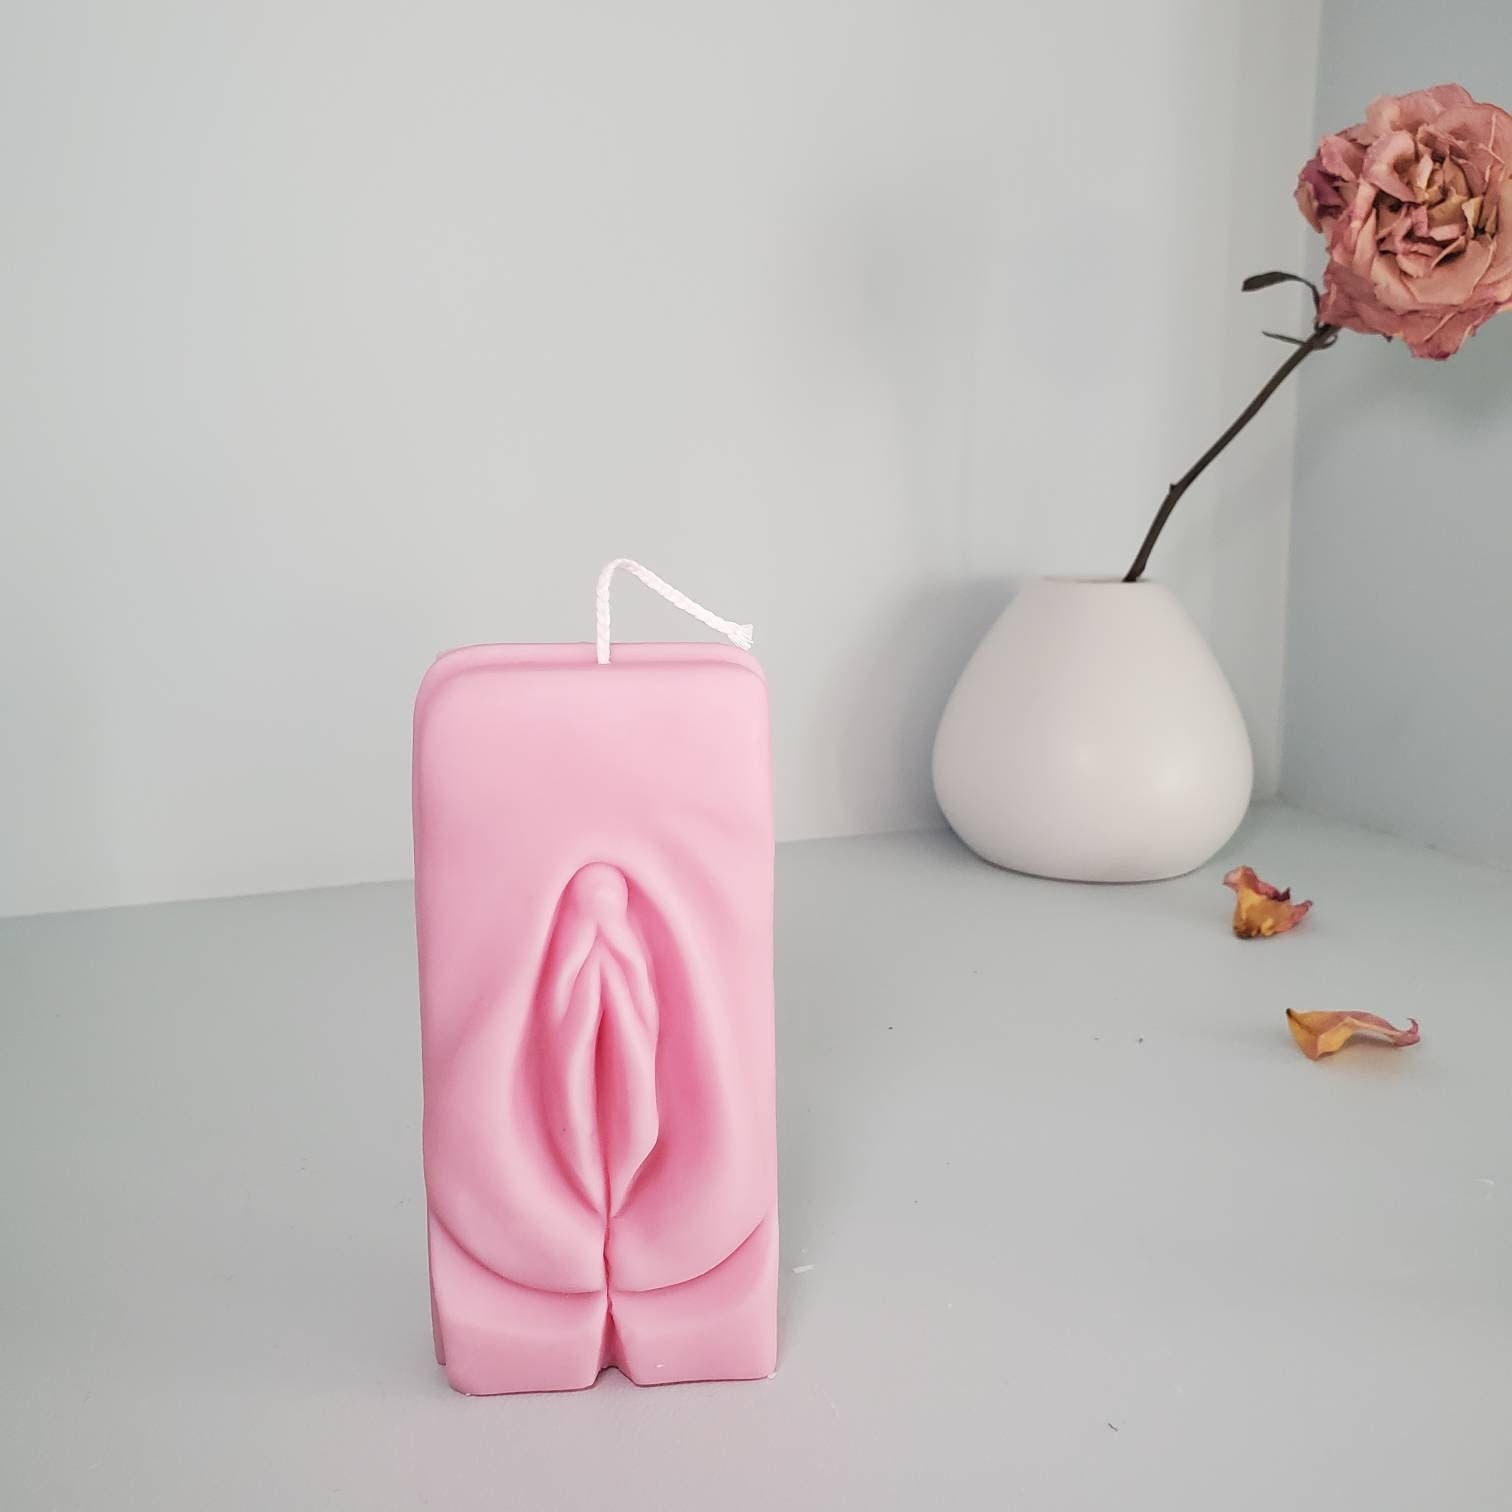 Vagina Candle - Yoni Vulva Candle - pussy shape candle